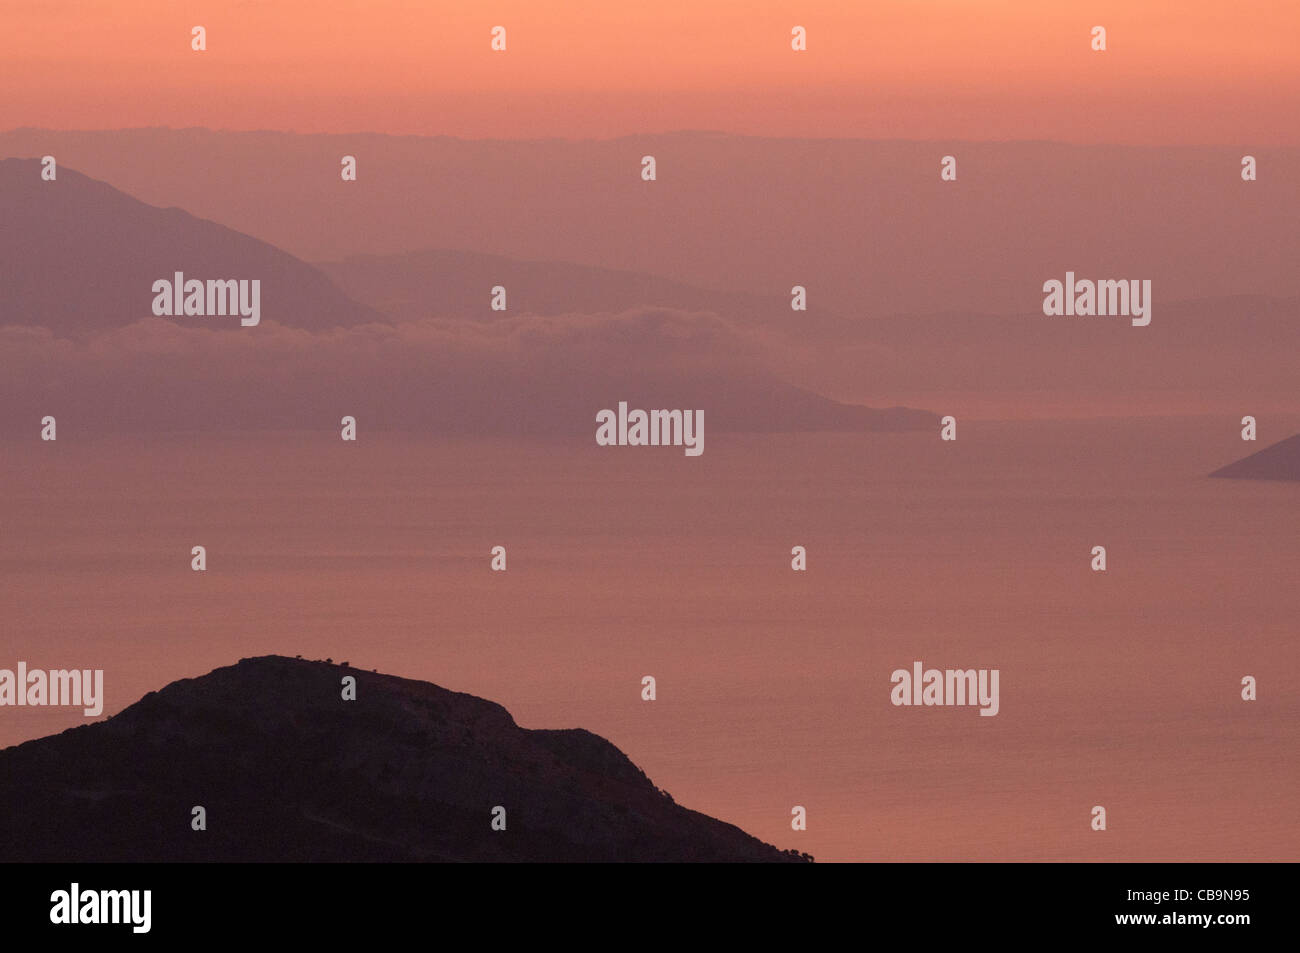 Aegean sea at dawn, showing Ikaria island and Samos, Greece. Stock Photo